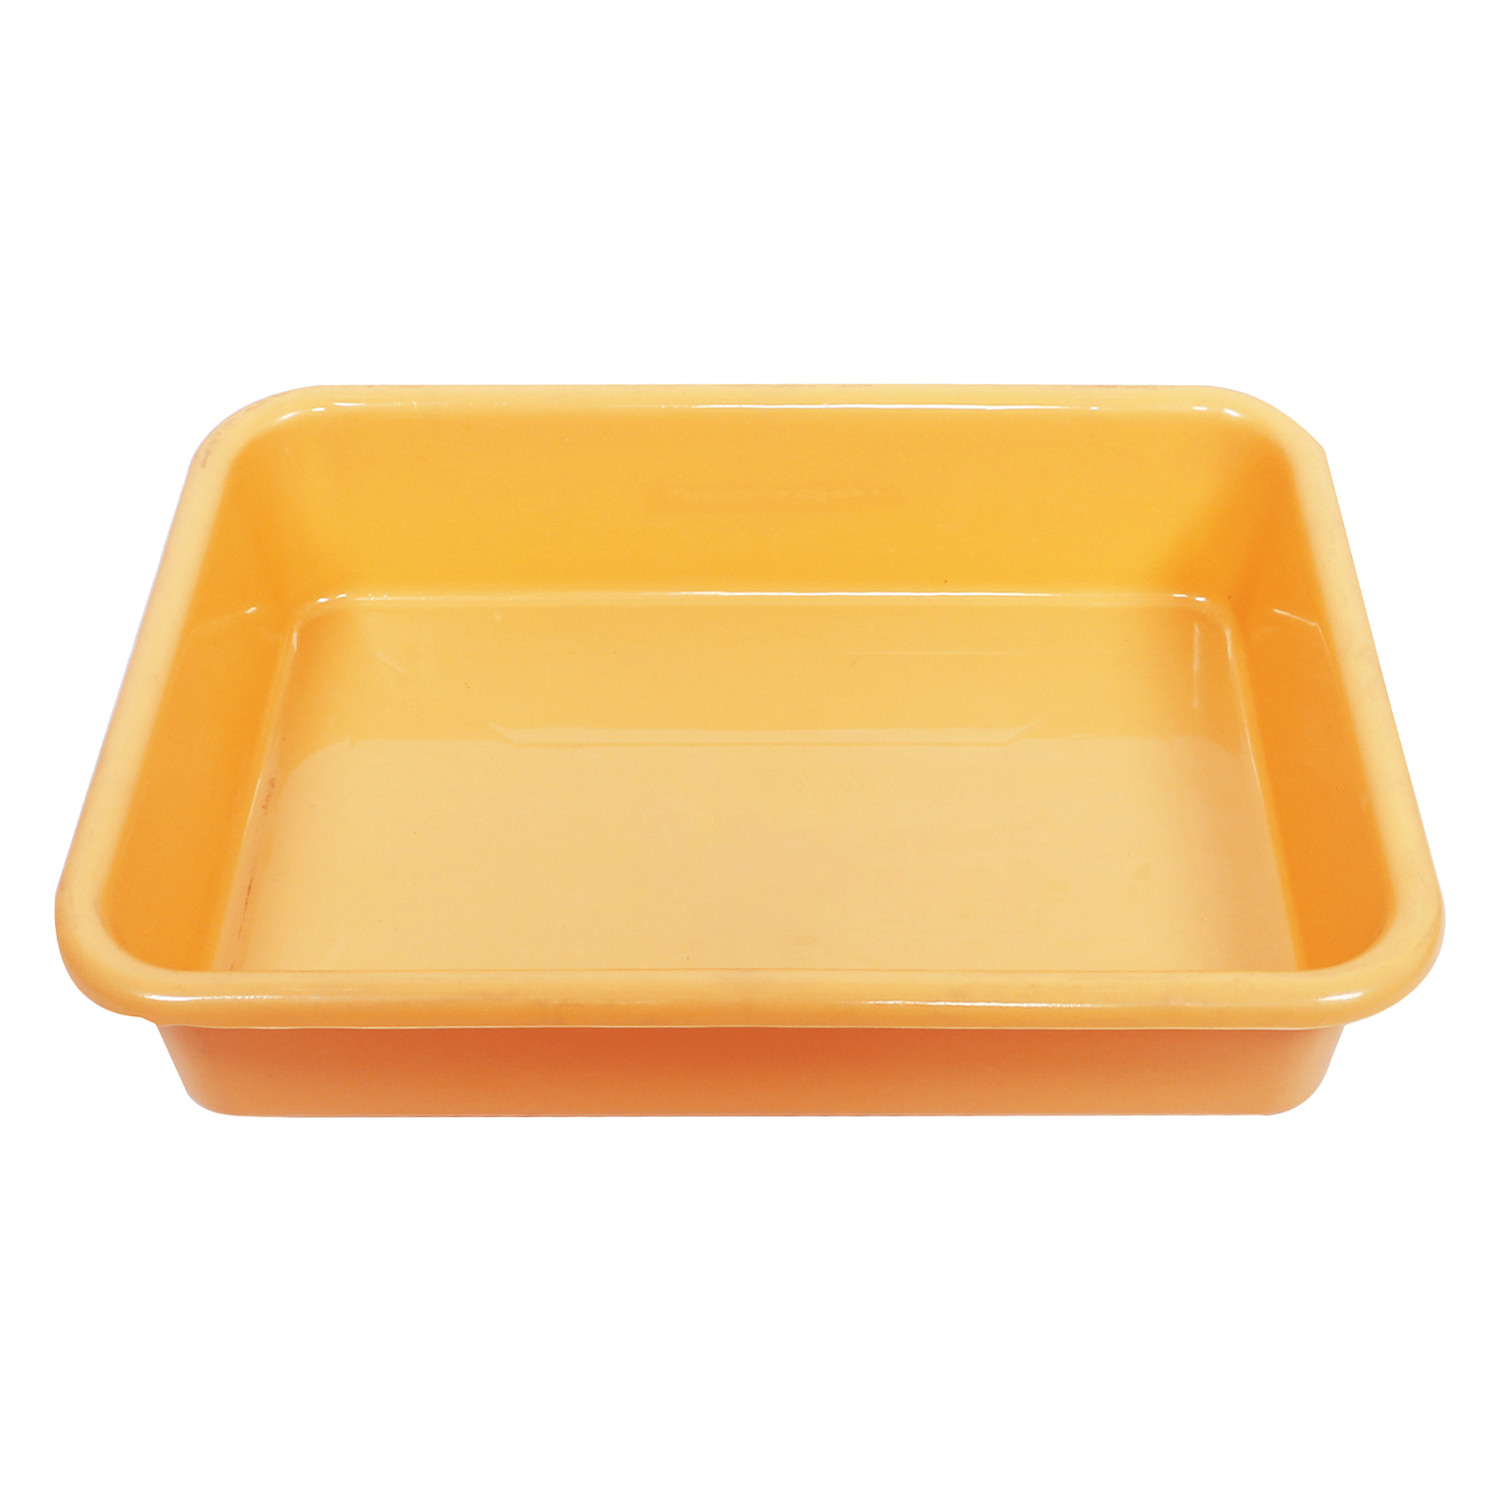 Kuber Industries Storage Tray|Versatile Plastic Storage Organizer|Rectangular Tray for Kitchen Storage|Storage Tray for office|Exel Tray 555|Pack of 2 (Yellow & White)